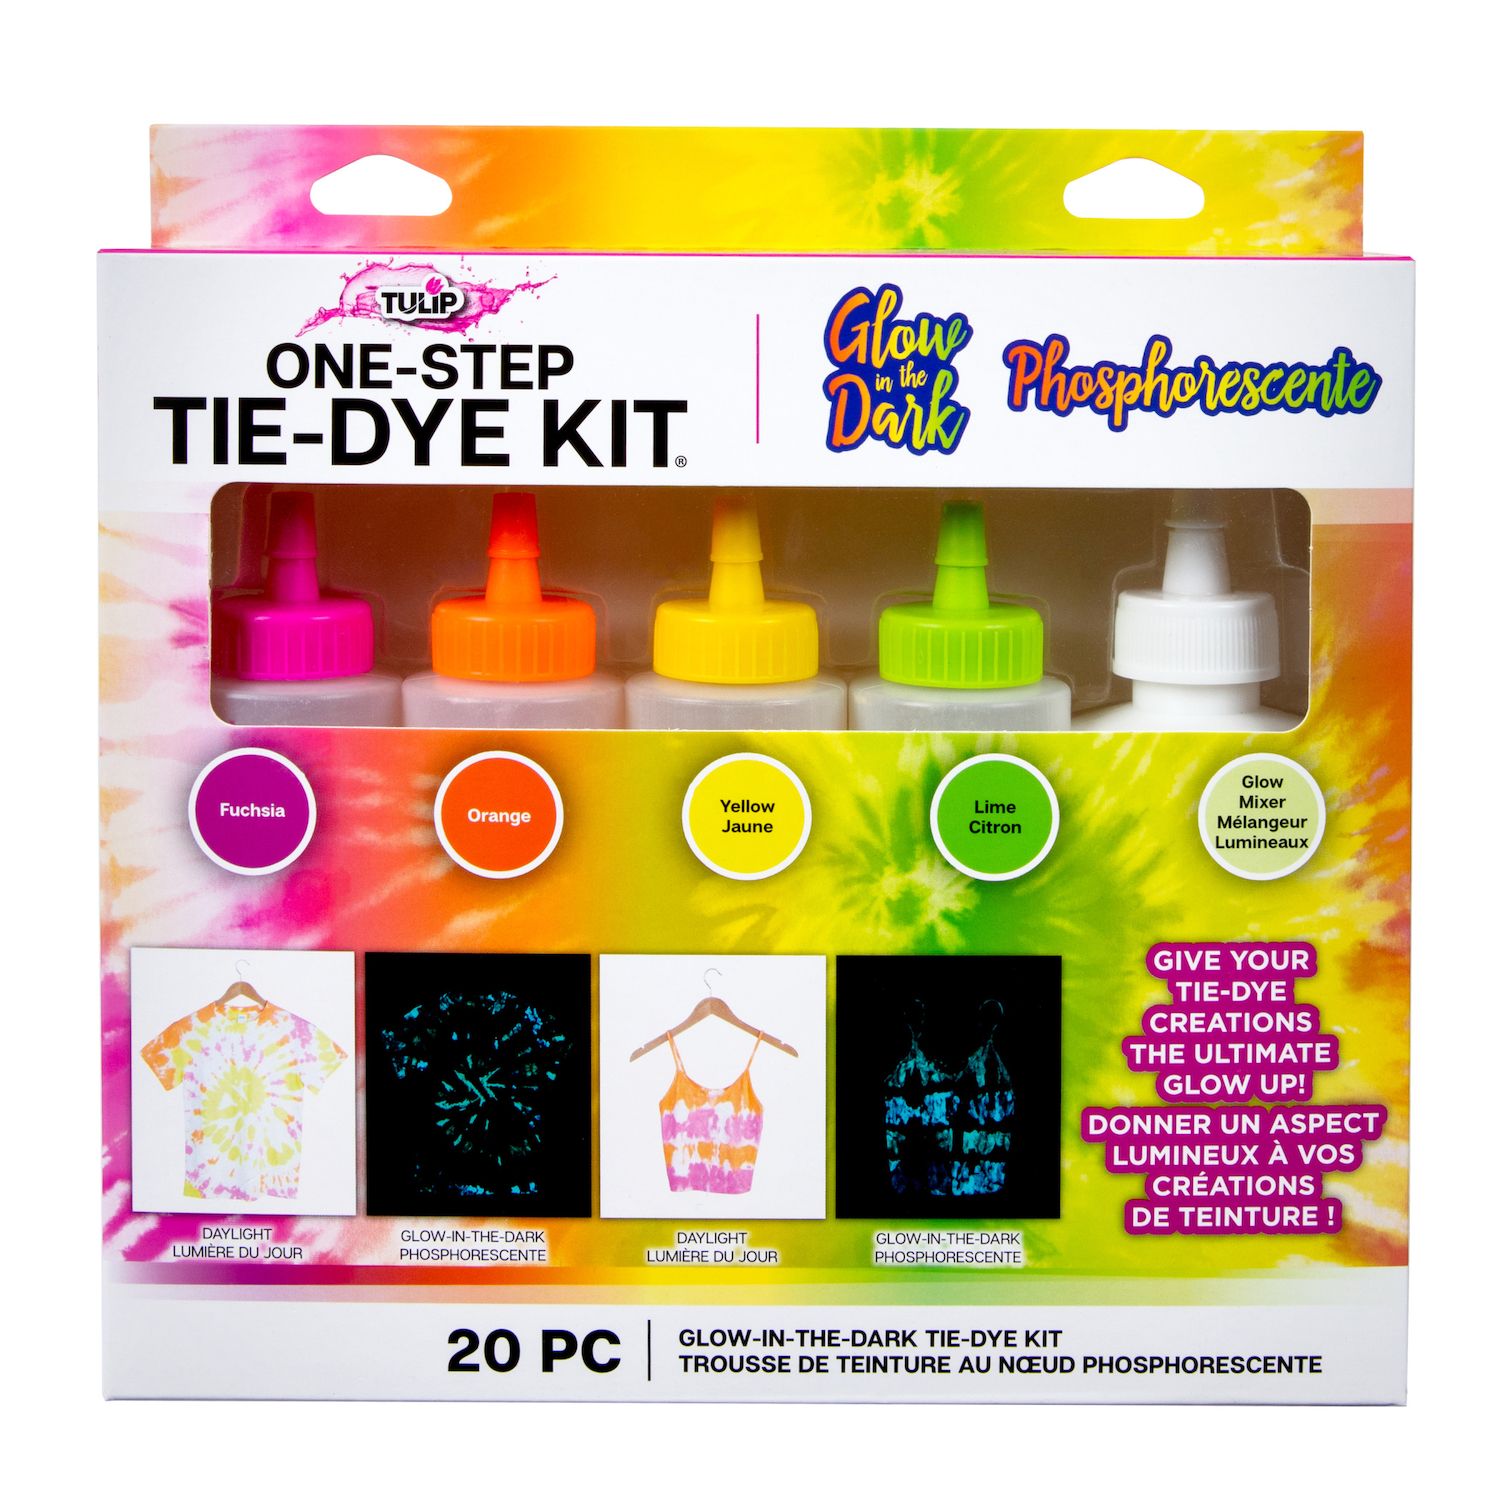 Tie Dye Kits for Adults